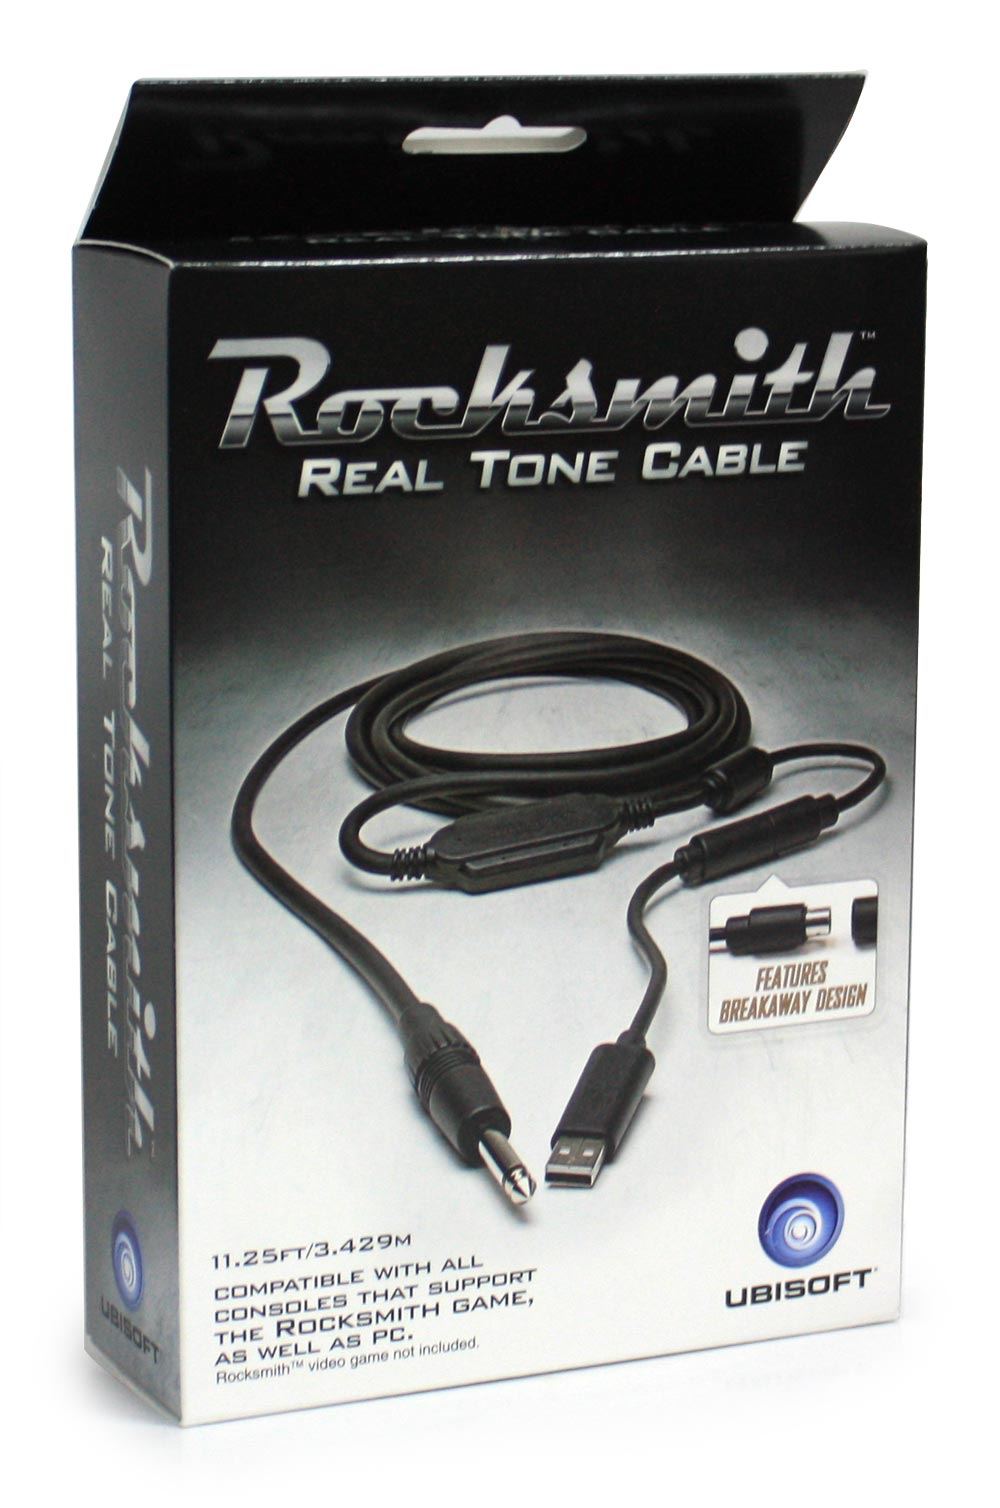 rocksmith free download pc no realtone cable